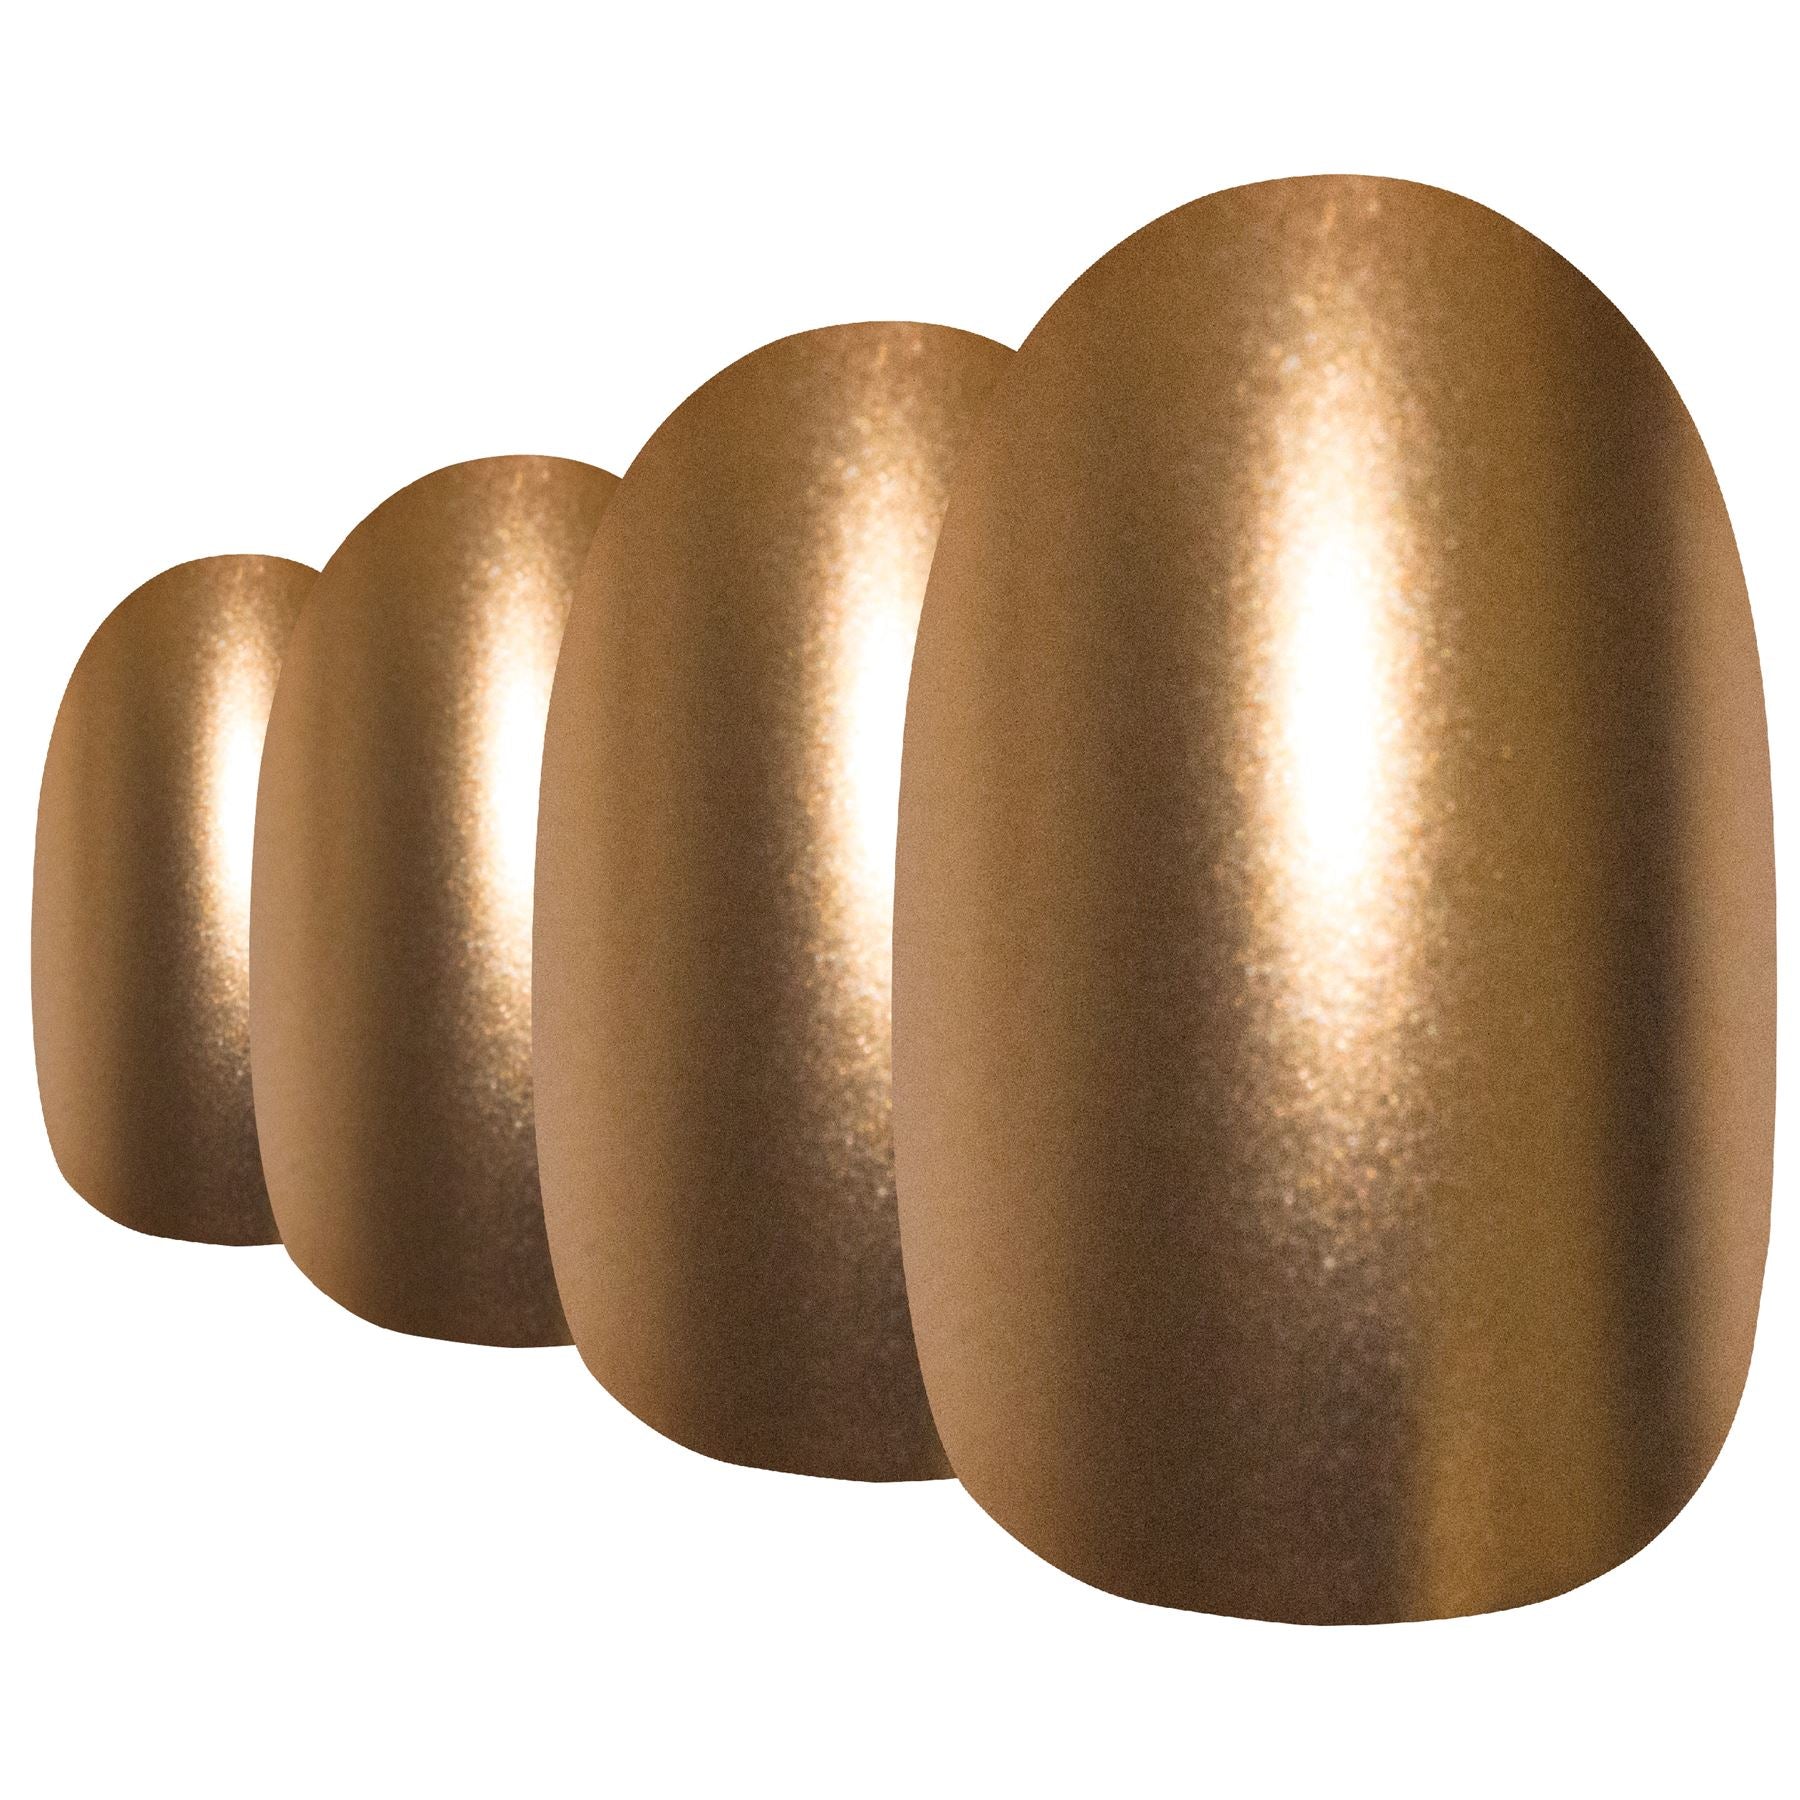 False Nails by Bling Art Gold Matte Metallic Oval Medium Fake Acrylic Tips Glue